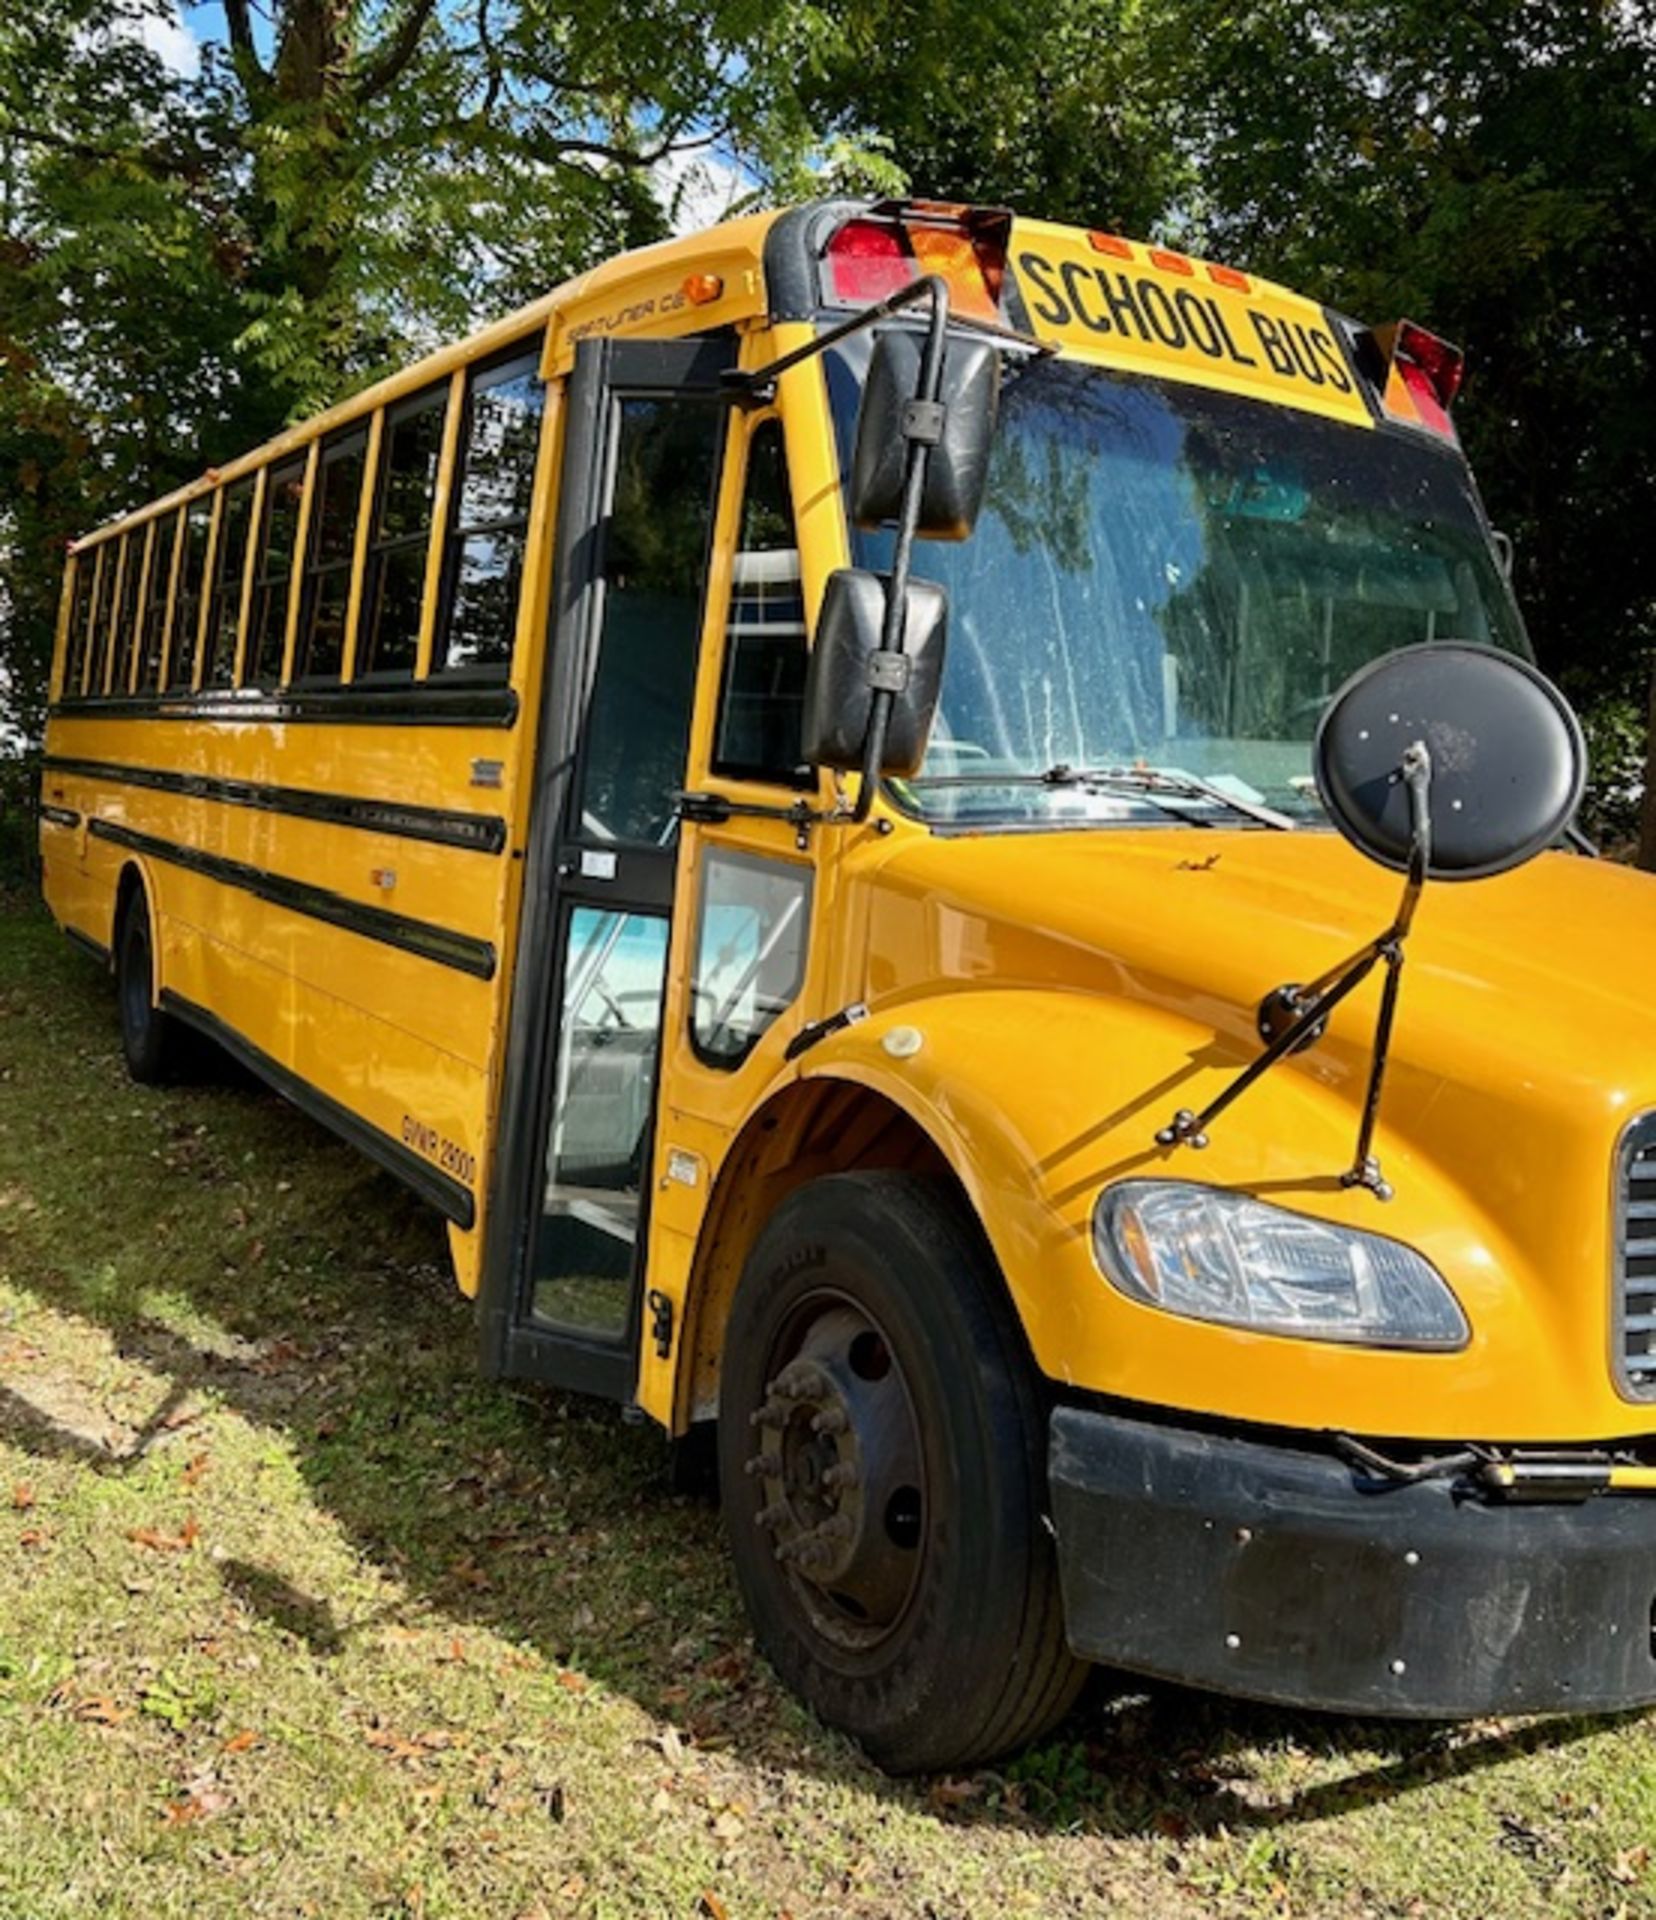 2018 Thomas 54 Seat School Bus - Image 2 of 15